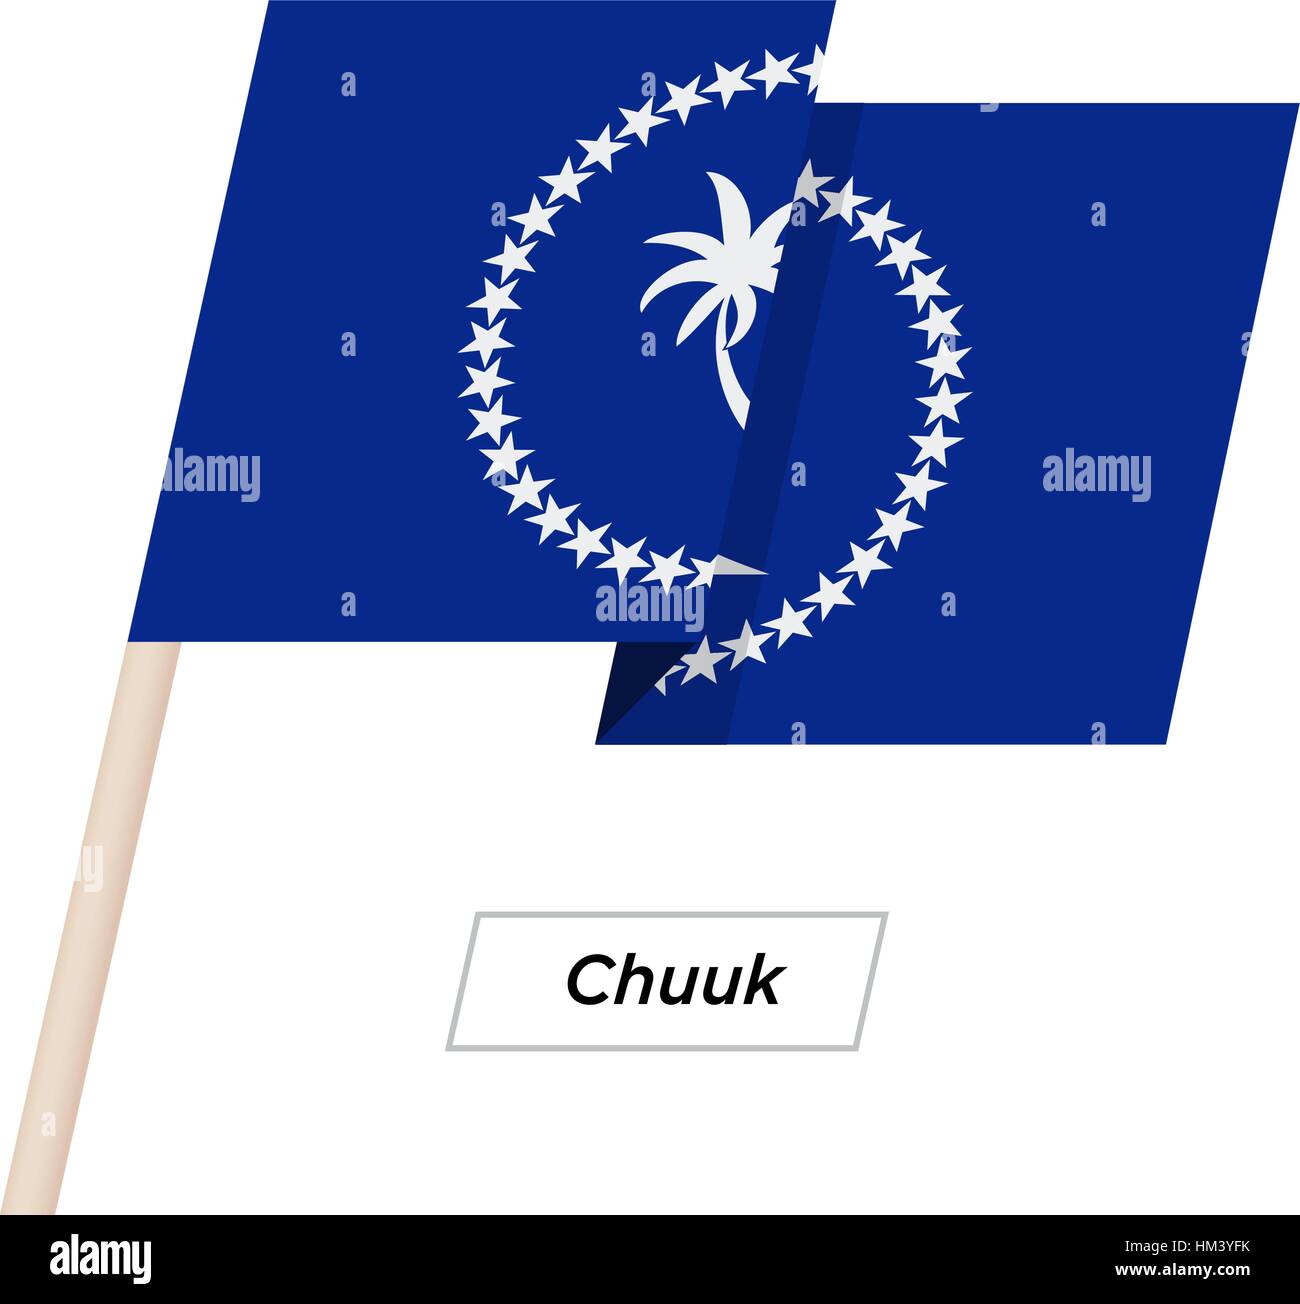 Chuuk Ribbon Waving Flag Isolated on White. Vector Illustration. Stock Vector